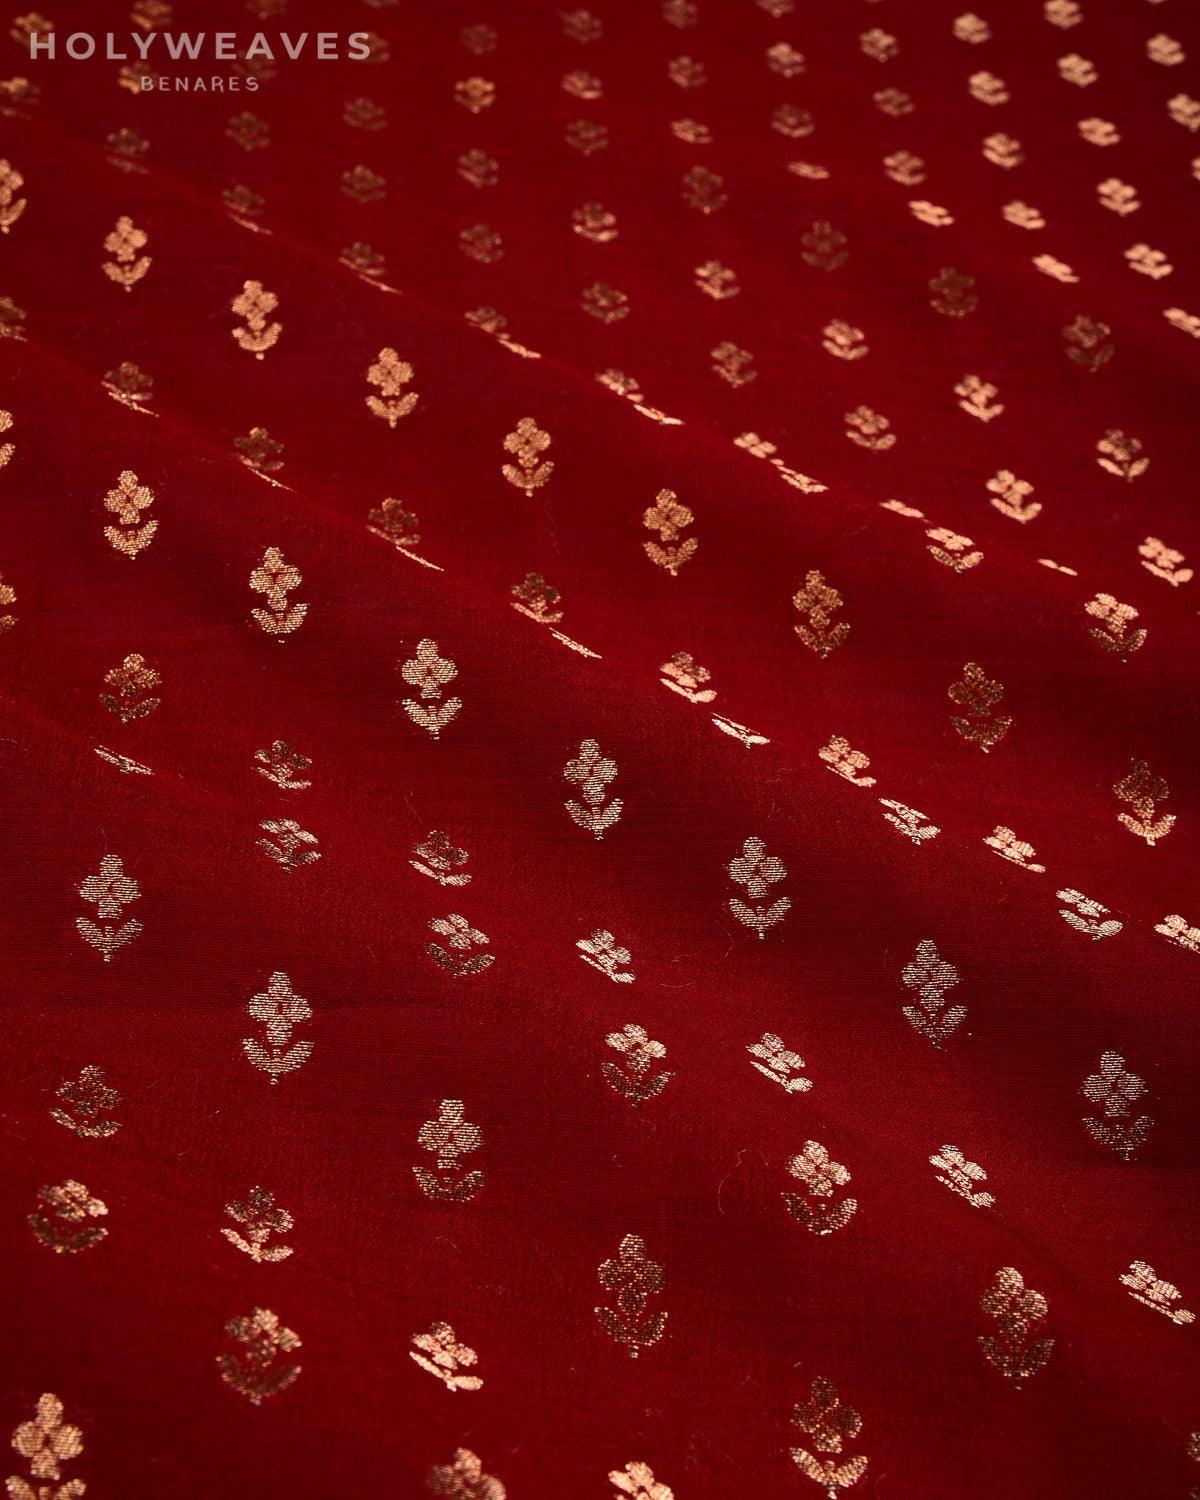 Maroon Banarasi Zari Buti Cutwork Brocade Woven Spun Silk Fabric - By HolyWeaves, Benares